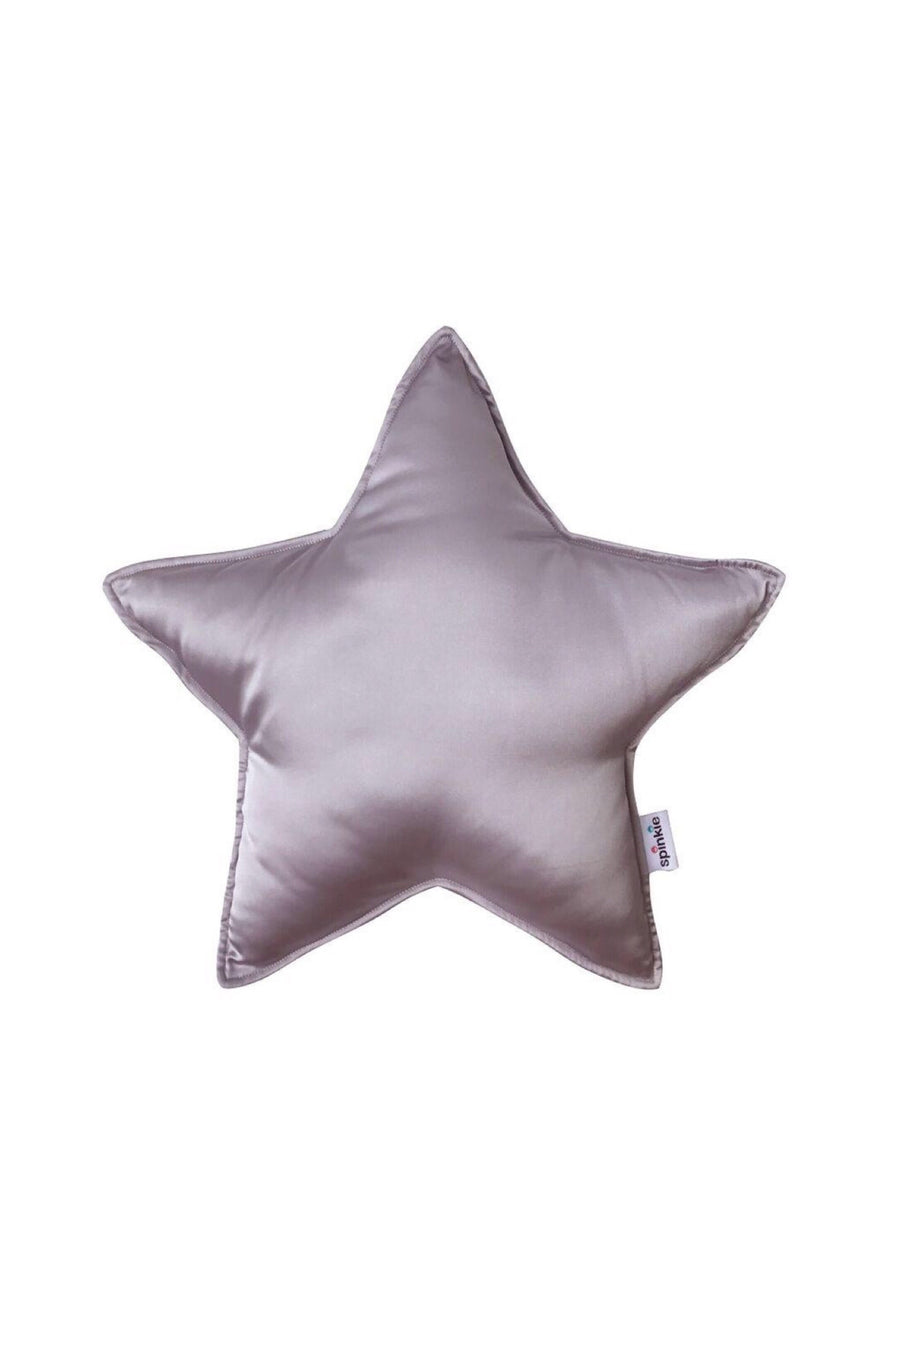 Charmeuse Star Pillow Hushed Violet, Cushion, Spinkie - 3LittlePicks